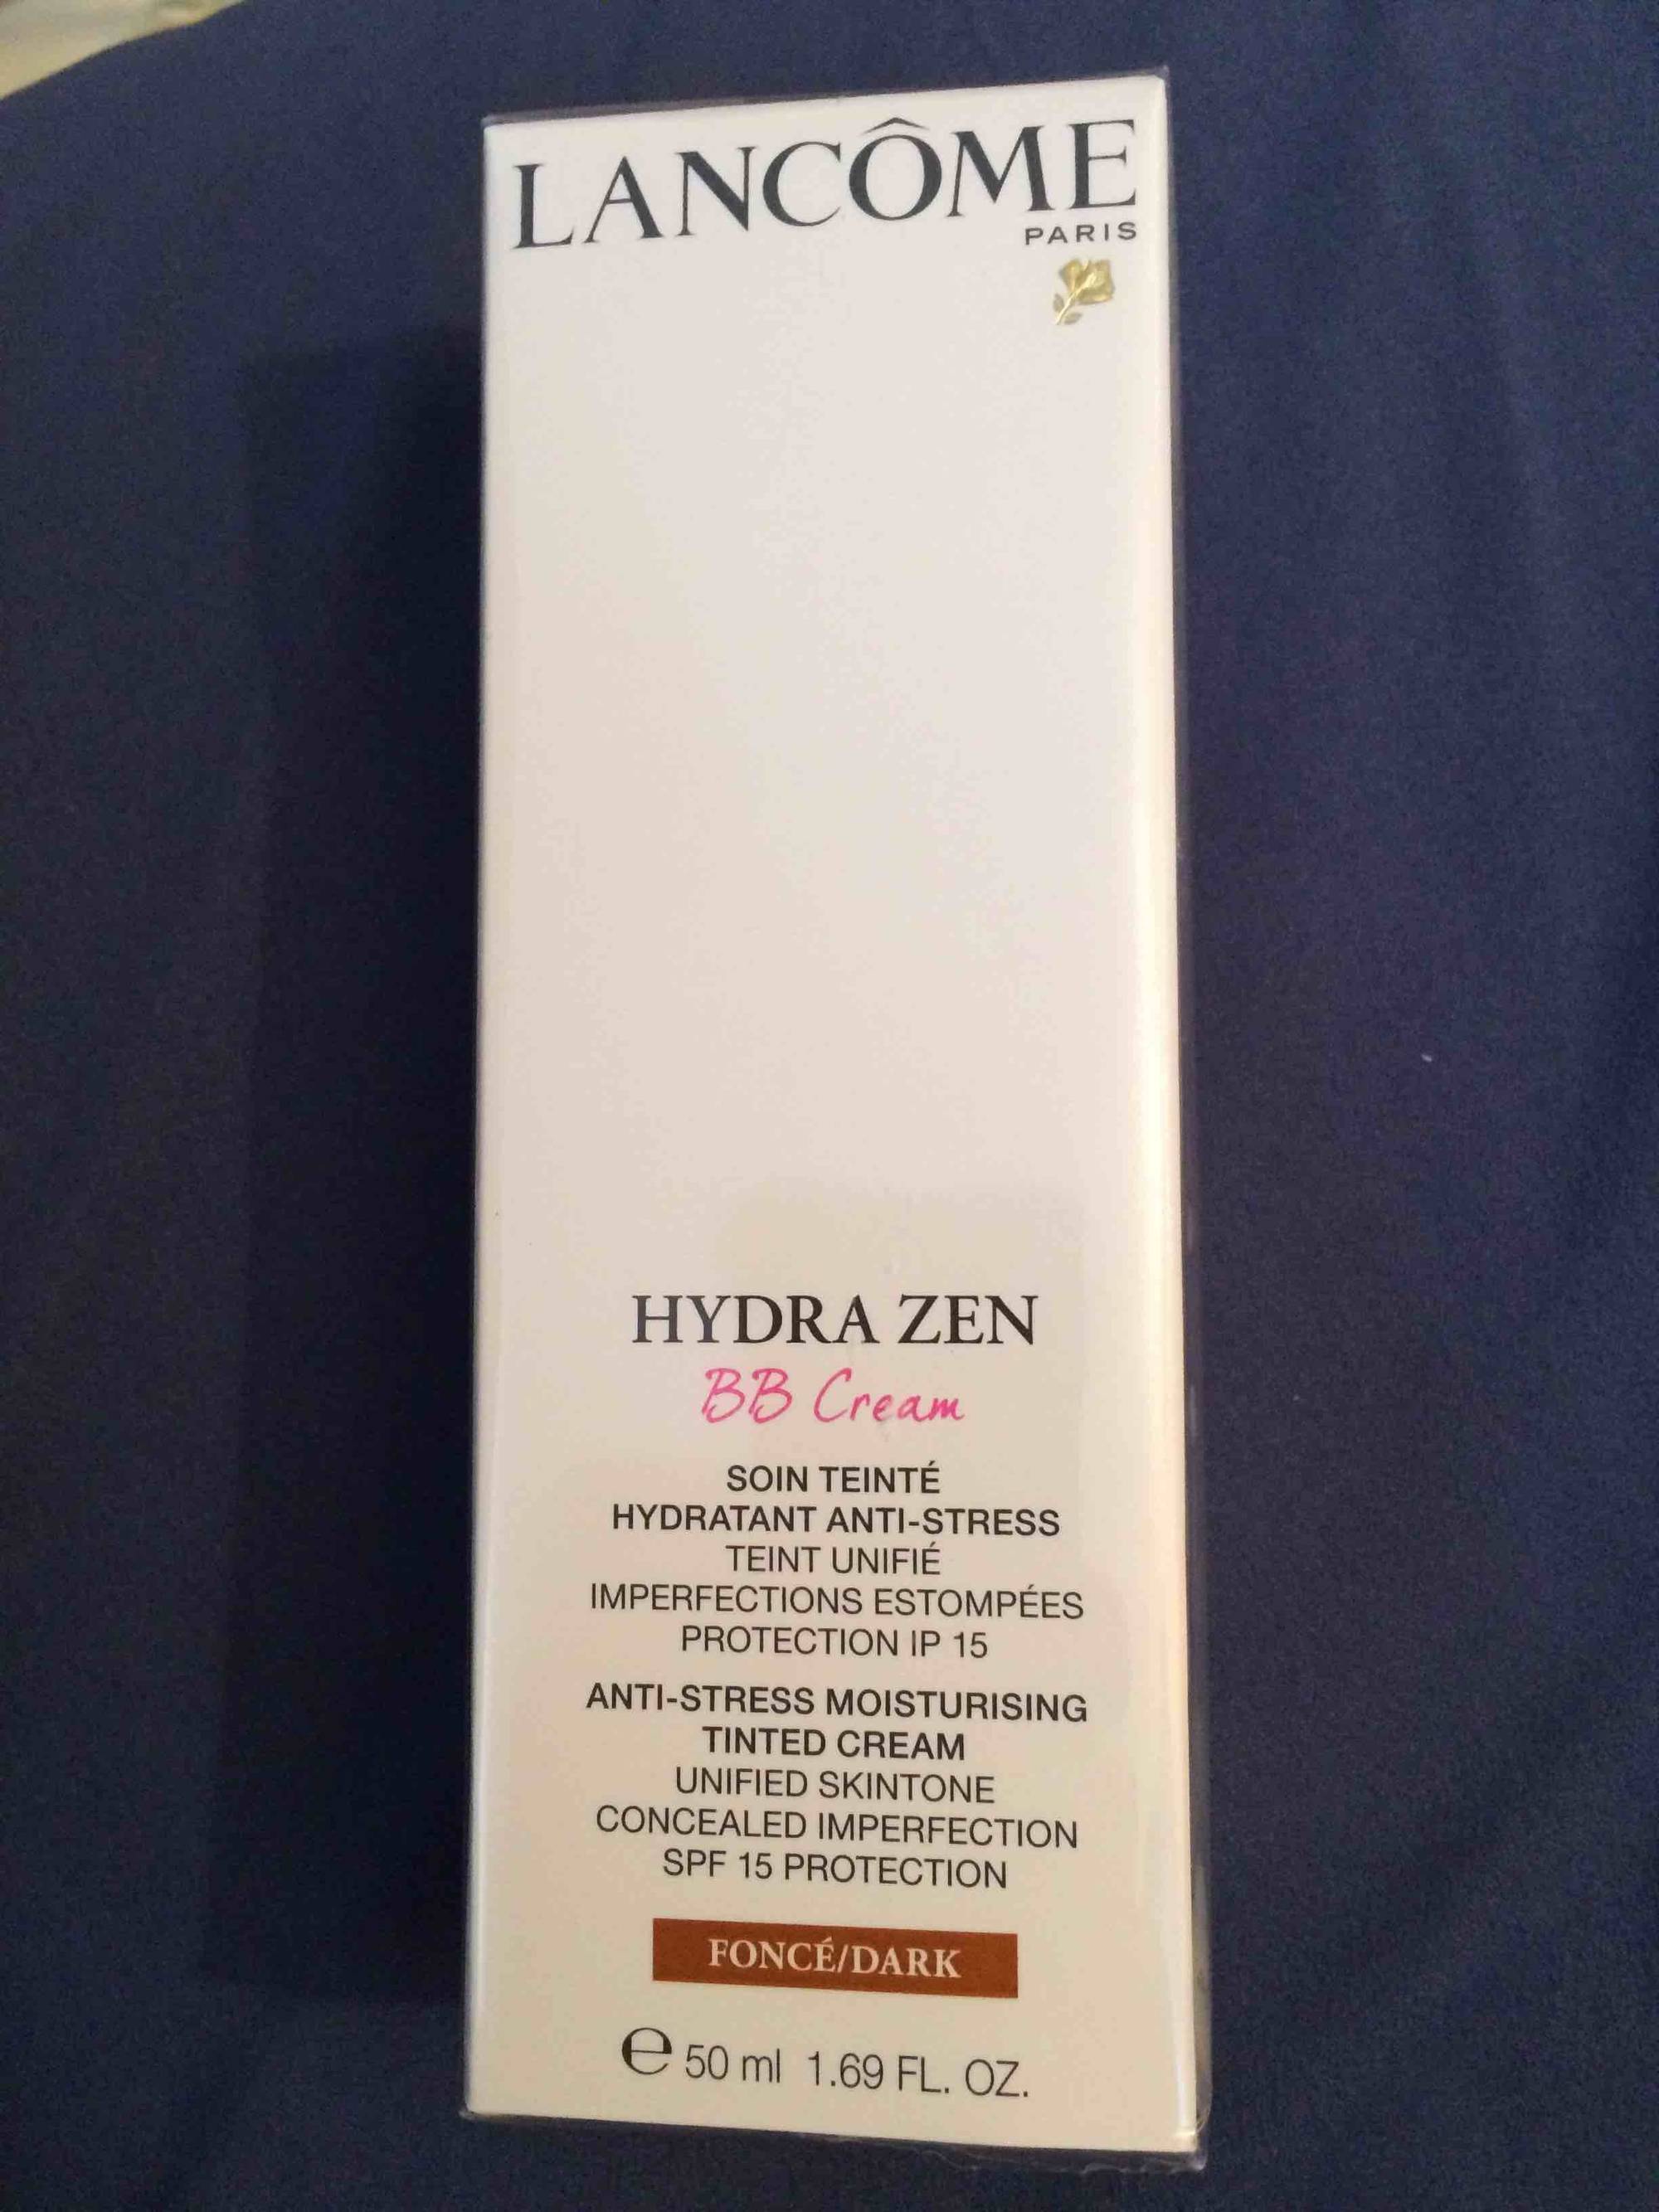 LANCÔME - Hydra Zen - BB Cream - Soin teinté hydratant anti-stress - Foncé